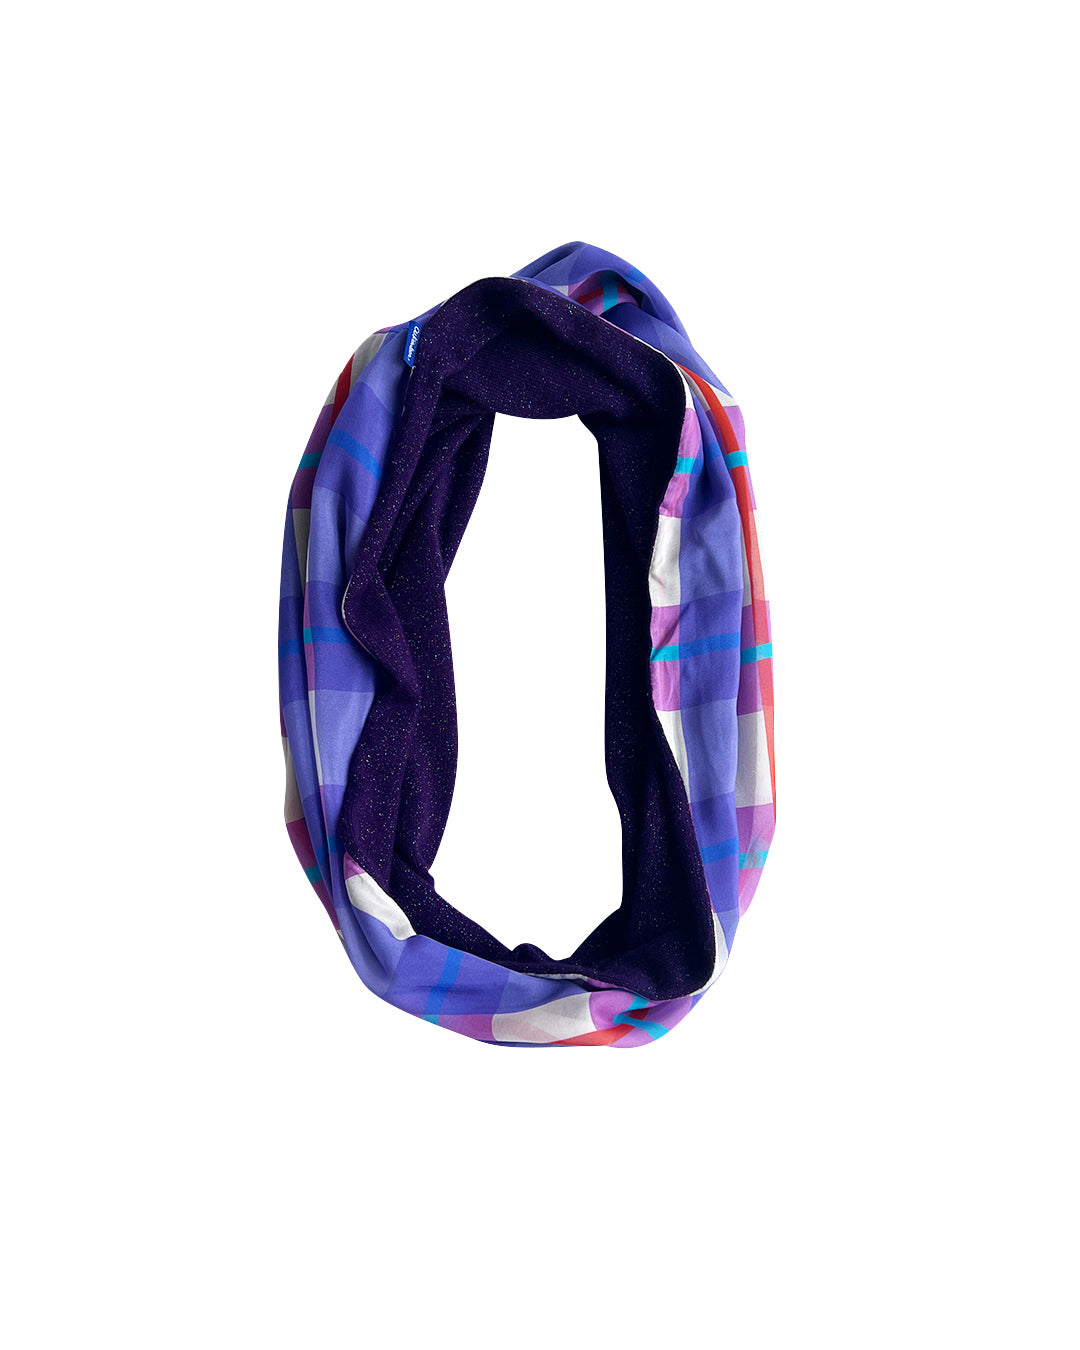 purple red blue plaid cashmere infinity loop purple scarf cukimber designs